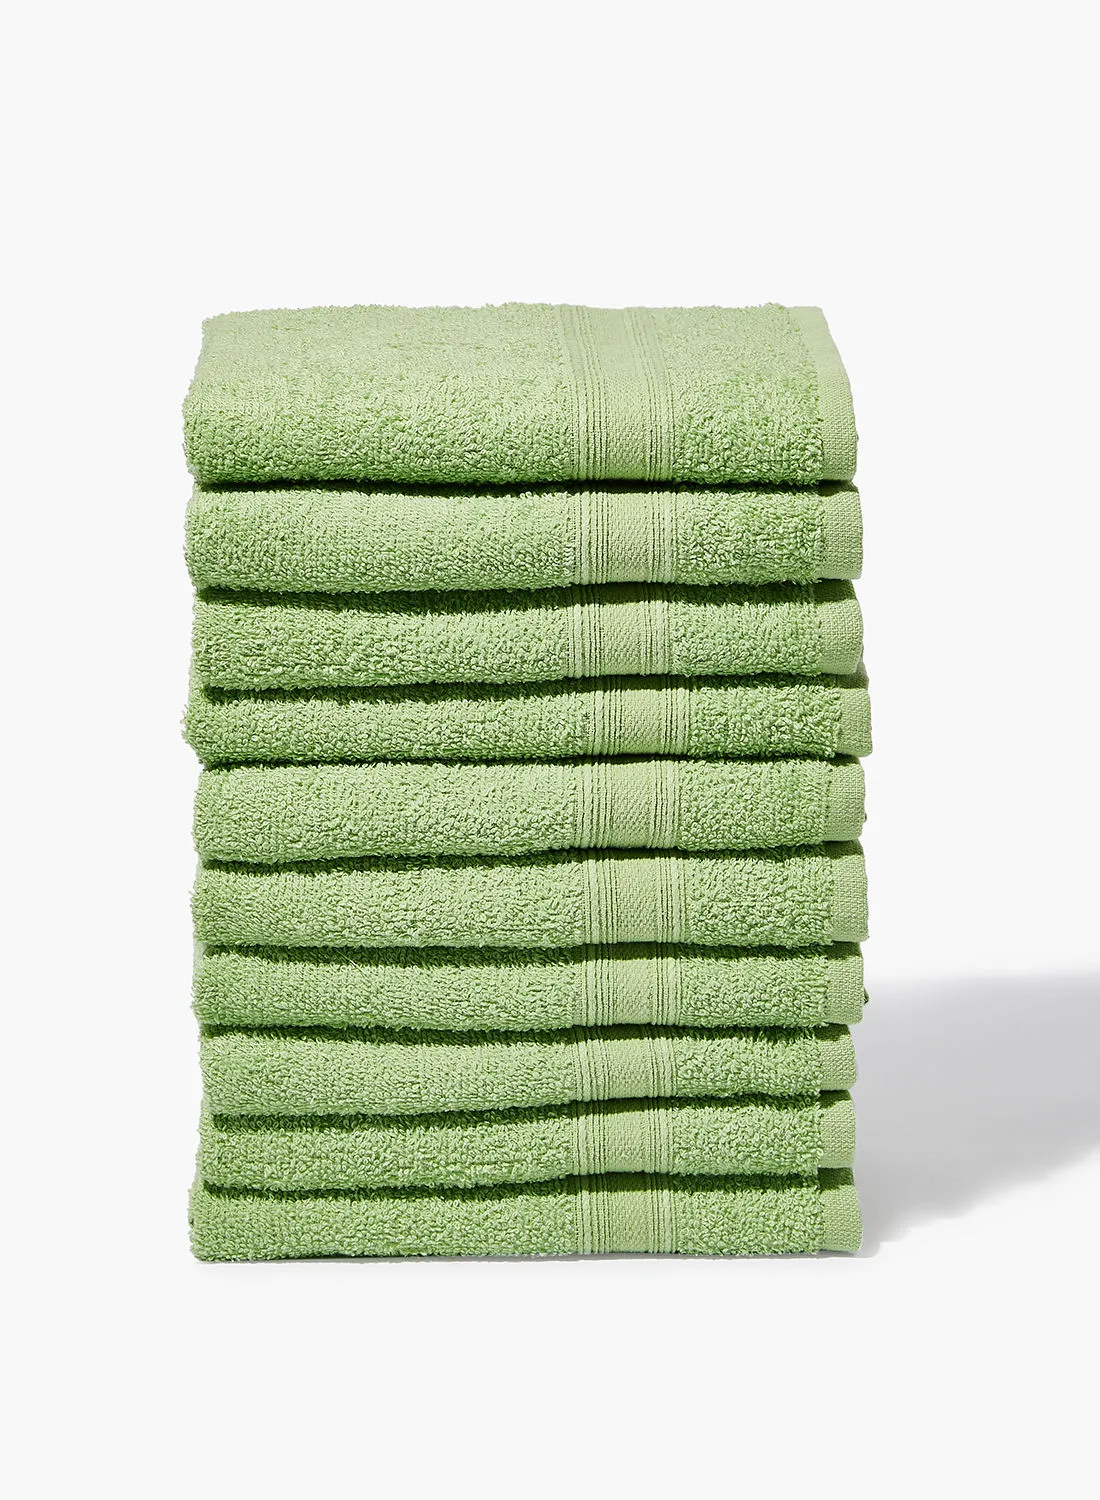 Amal 10 Piece Bathroom Towel Set - 400 GSM 100% Cotton Terry - 10 Face Towel - Green_Apple Color -Quick Dry - Super Absorbent